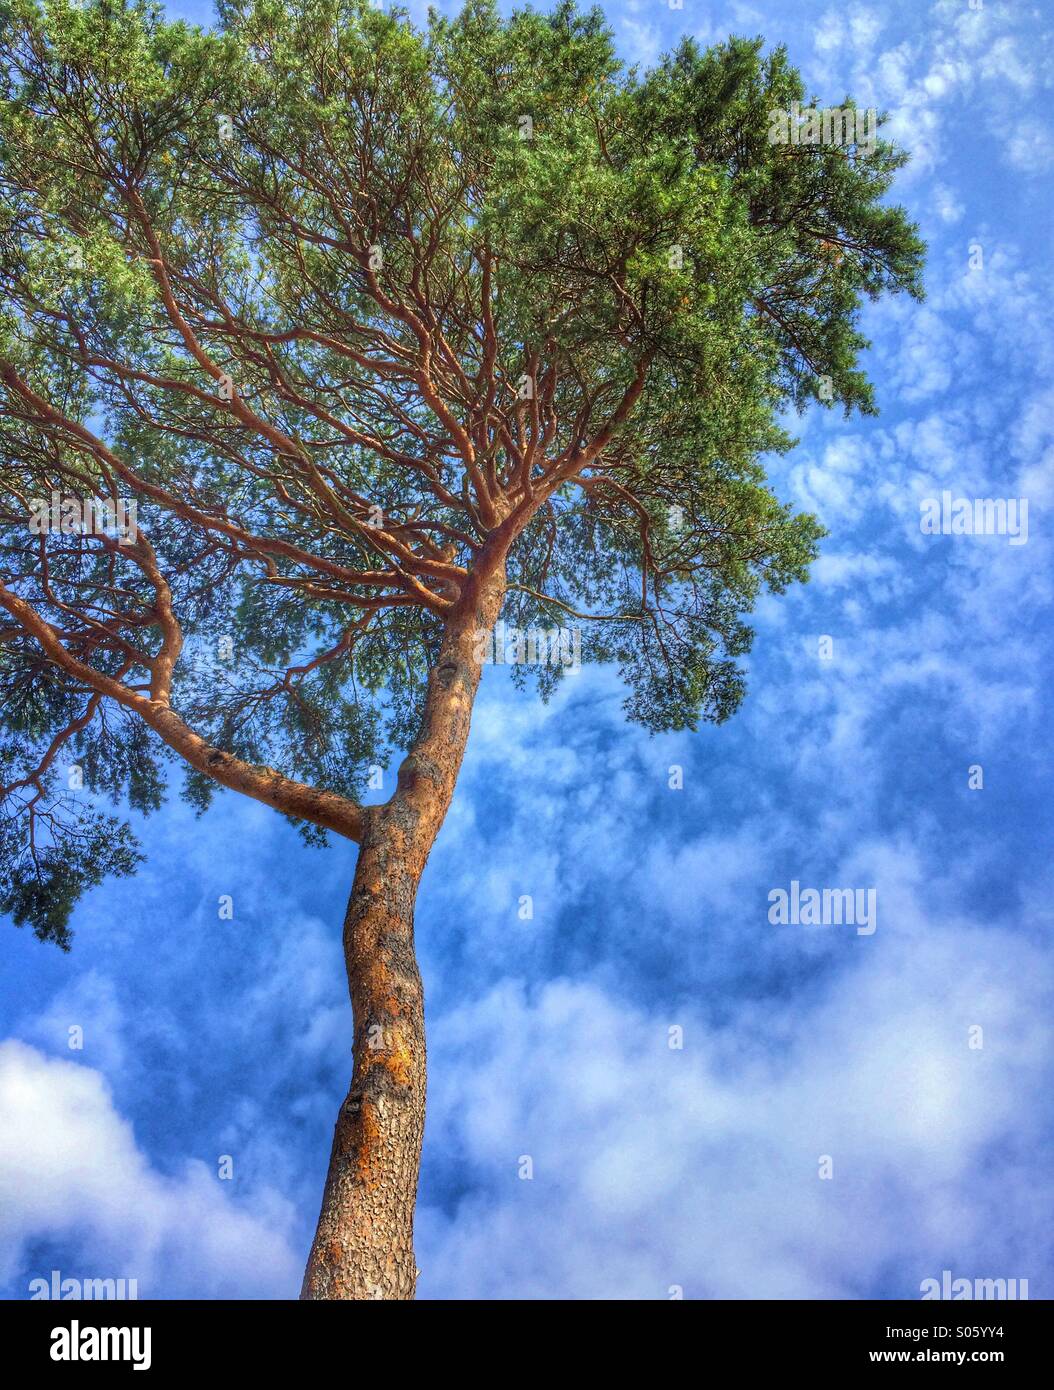 Fir tree against a summer sky Stock Photo